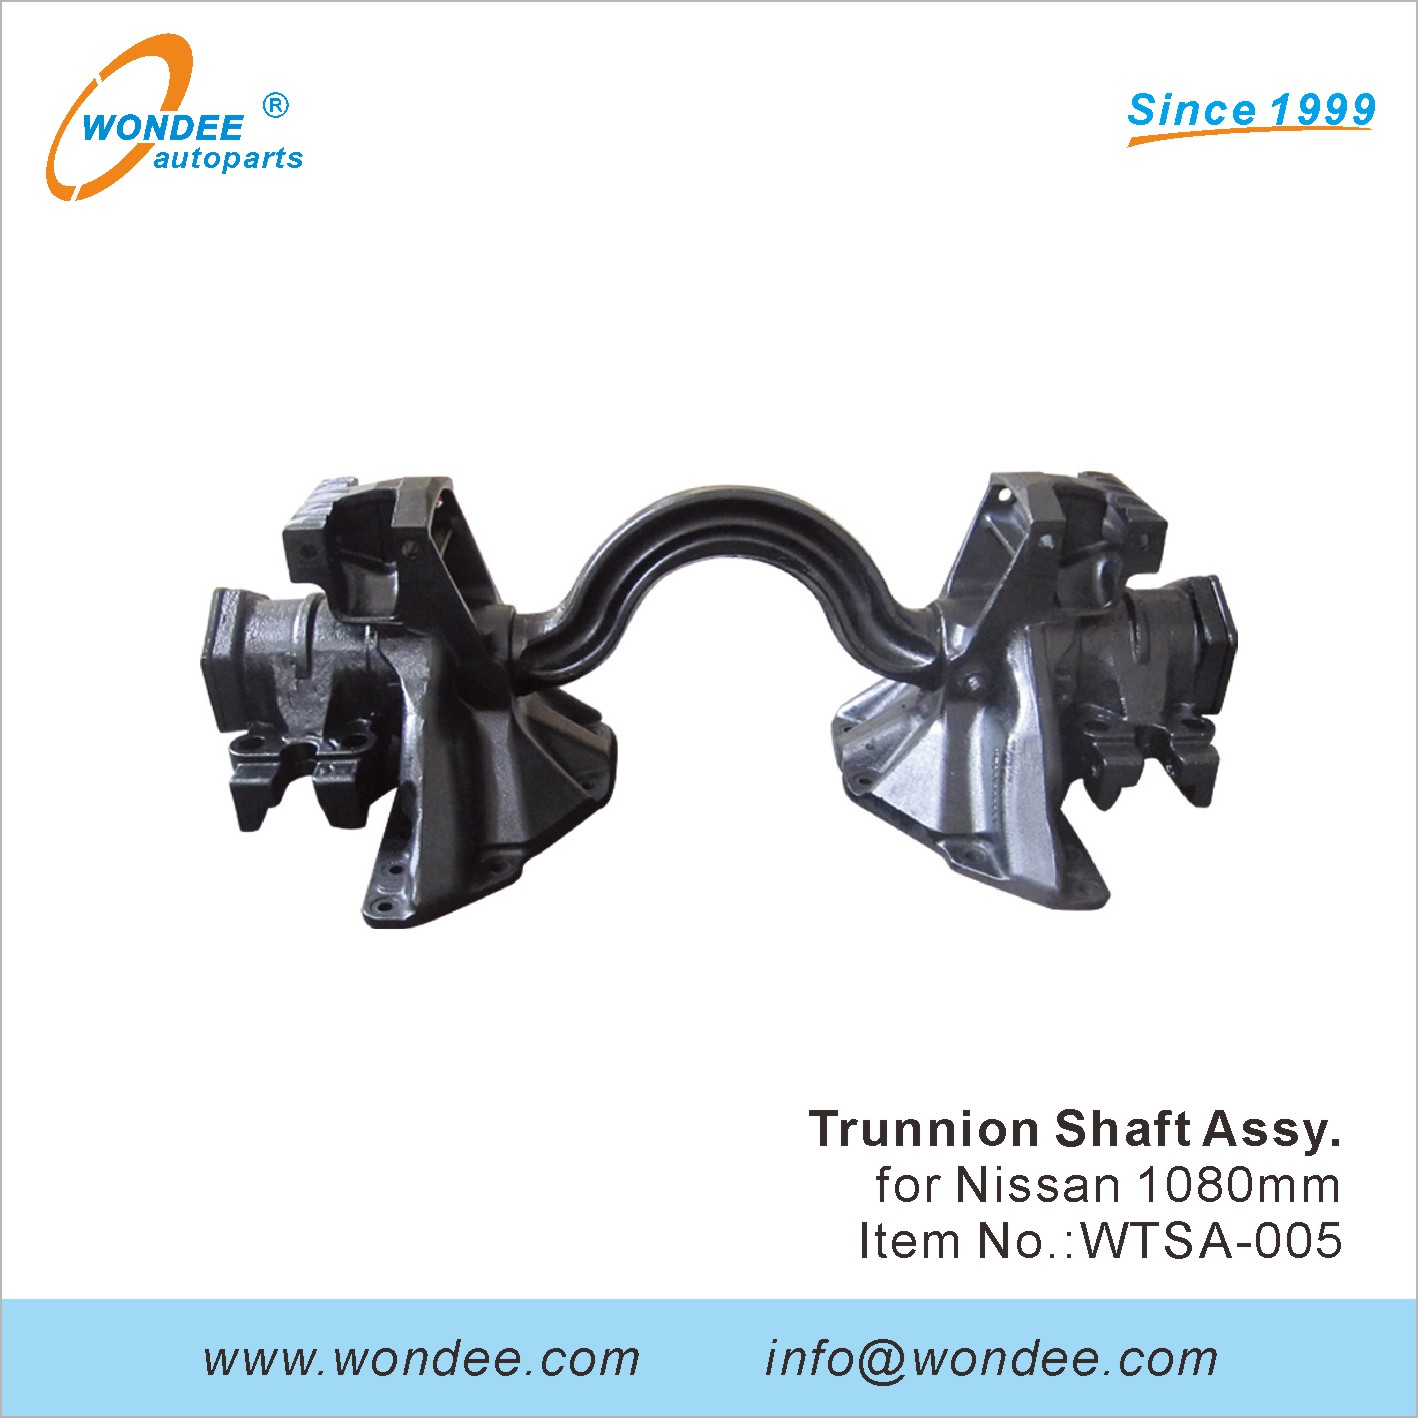 WONDEE trunnion shaft assembly (5)